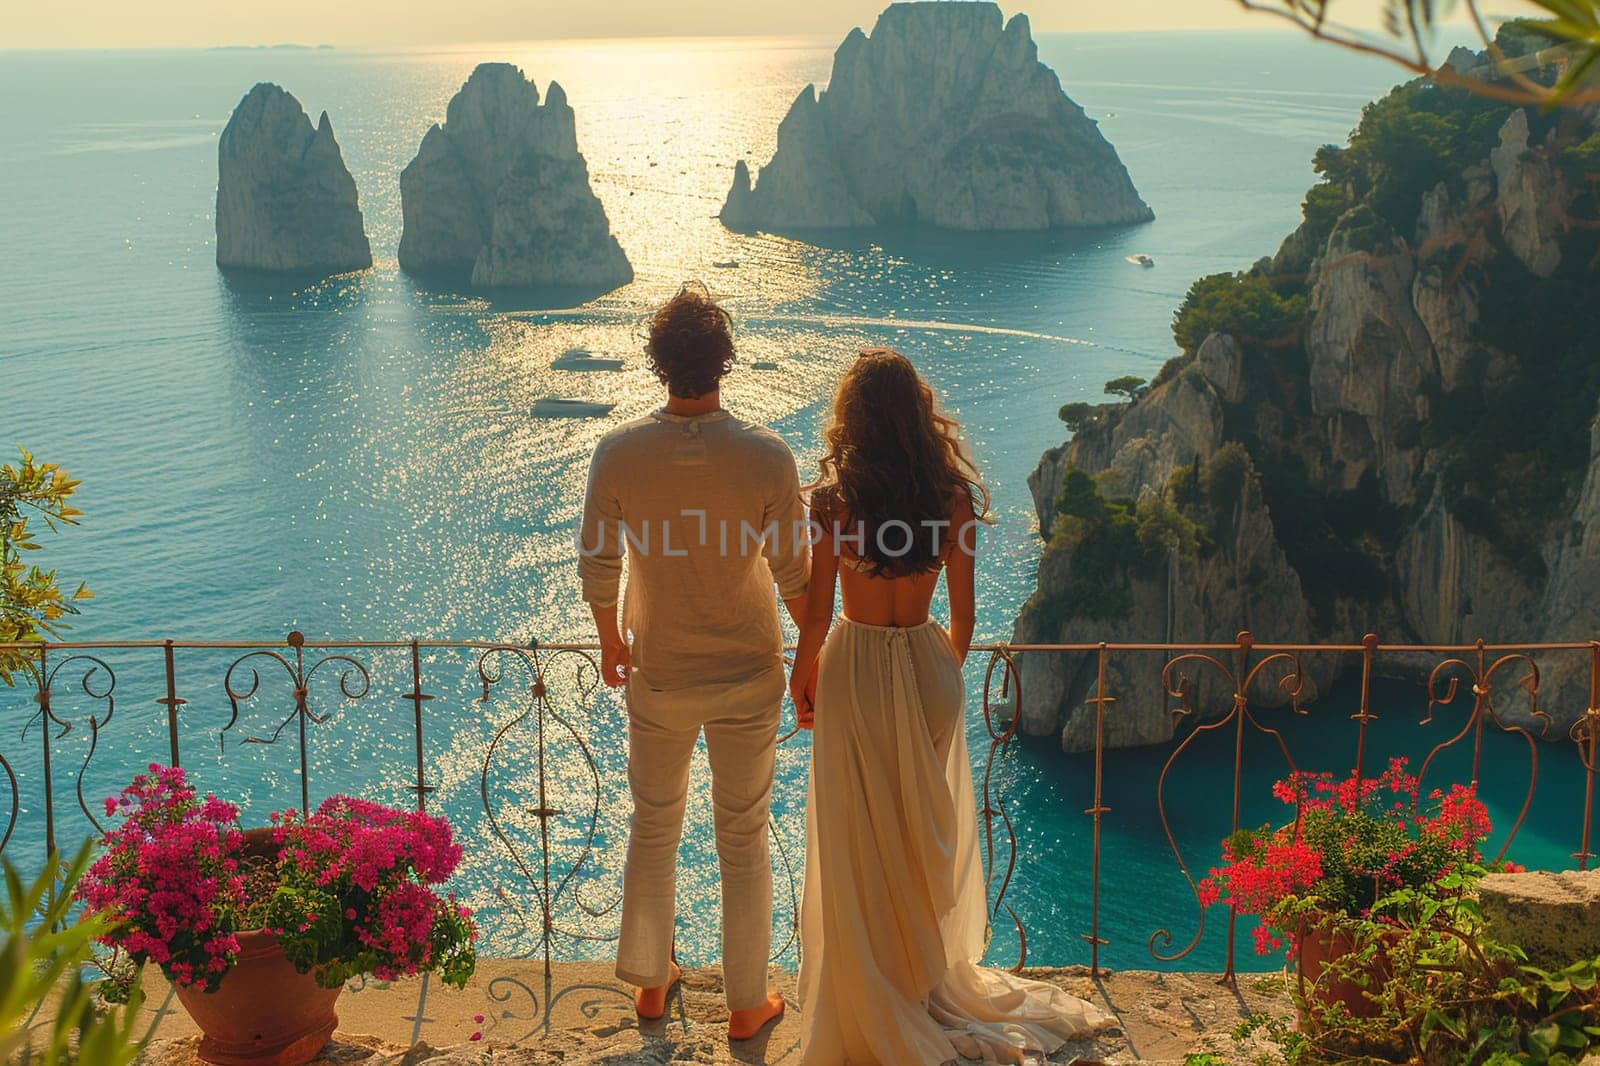 Sunset silhouette of couple on Capri cliffs by Ciorba